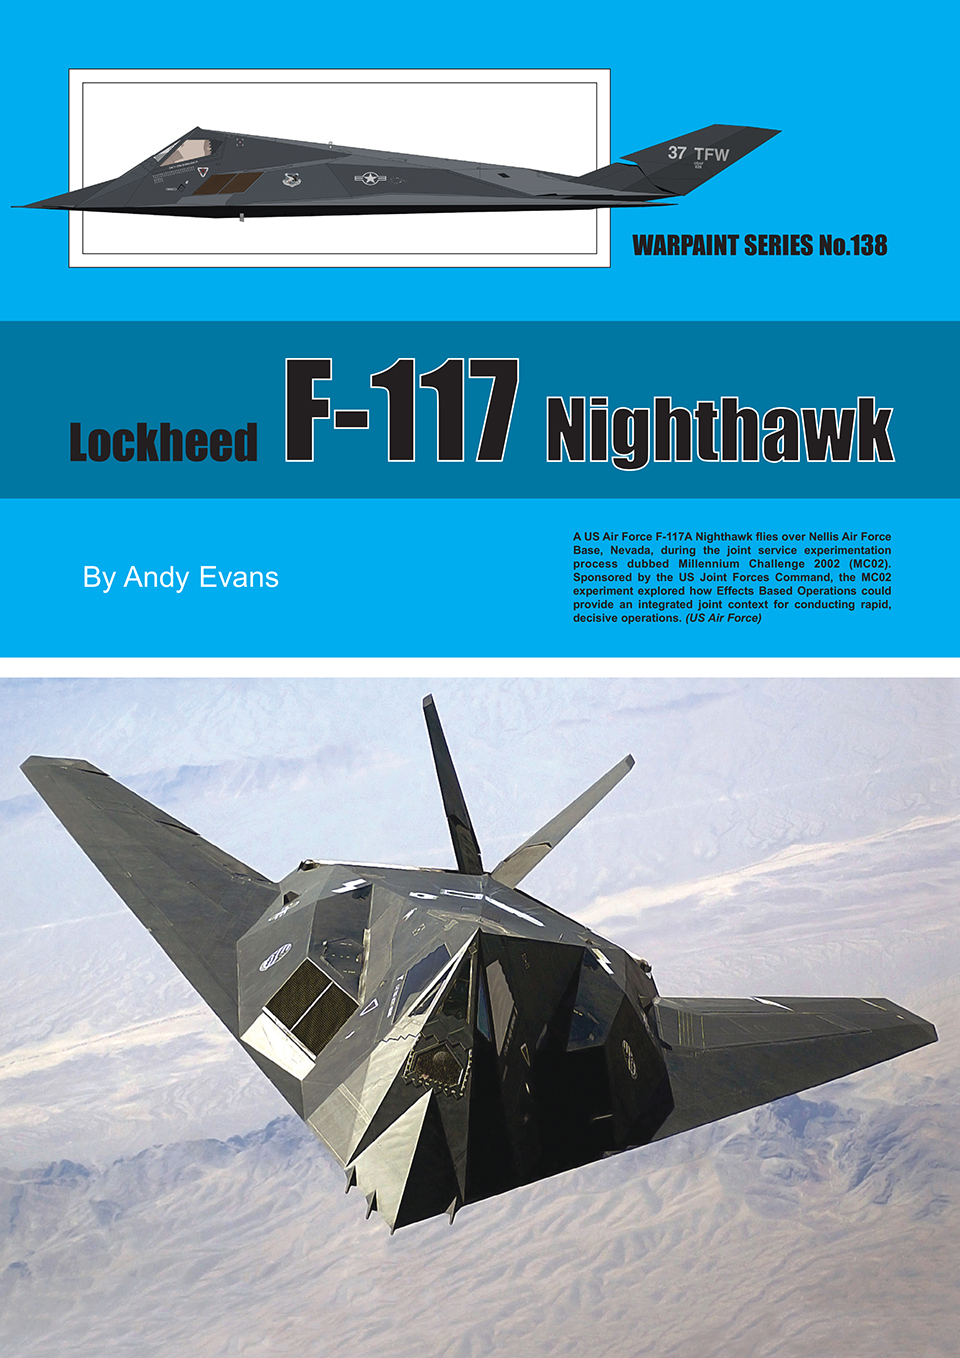 Guideline Publications Warpaint 138 Lockheed F-117 Nighthawk 